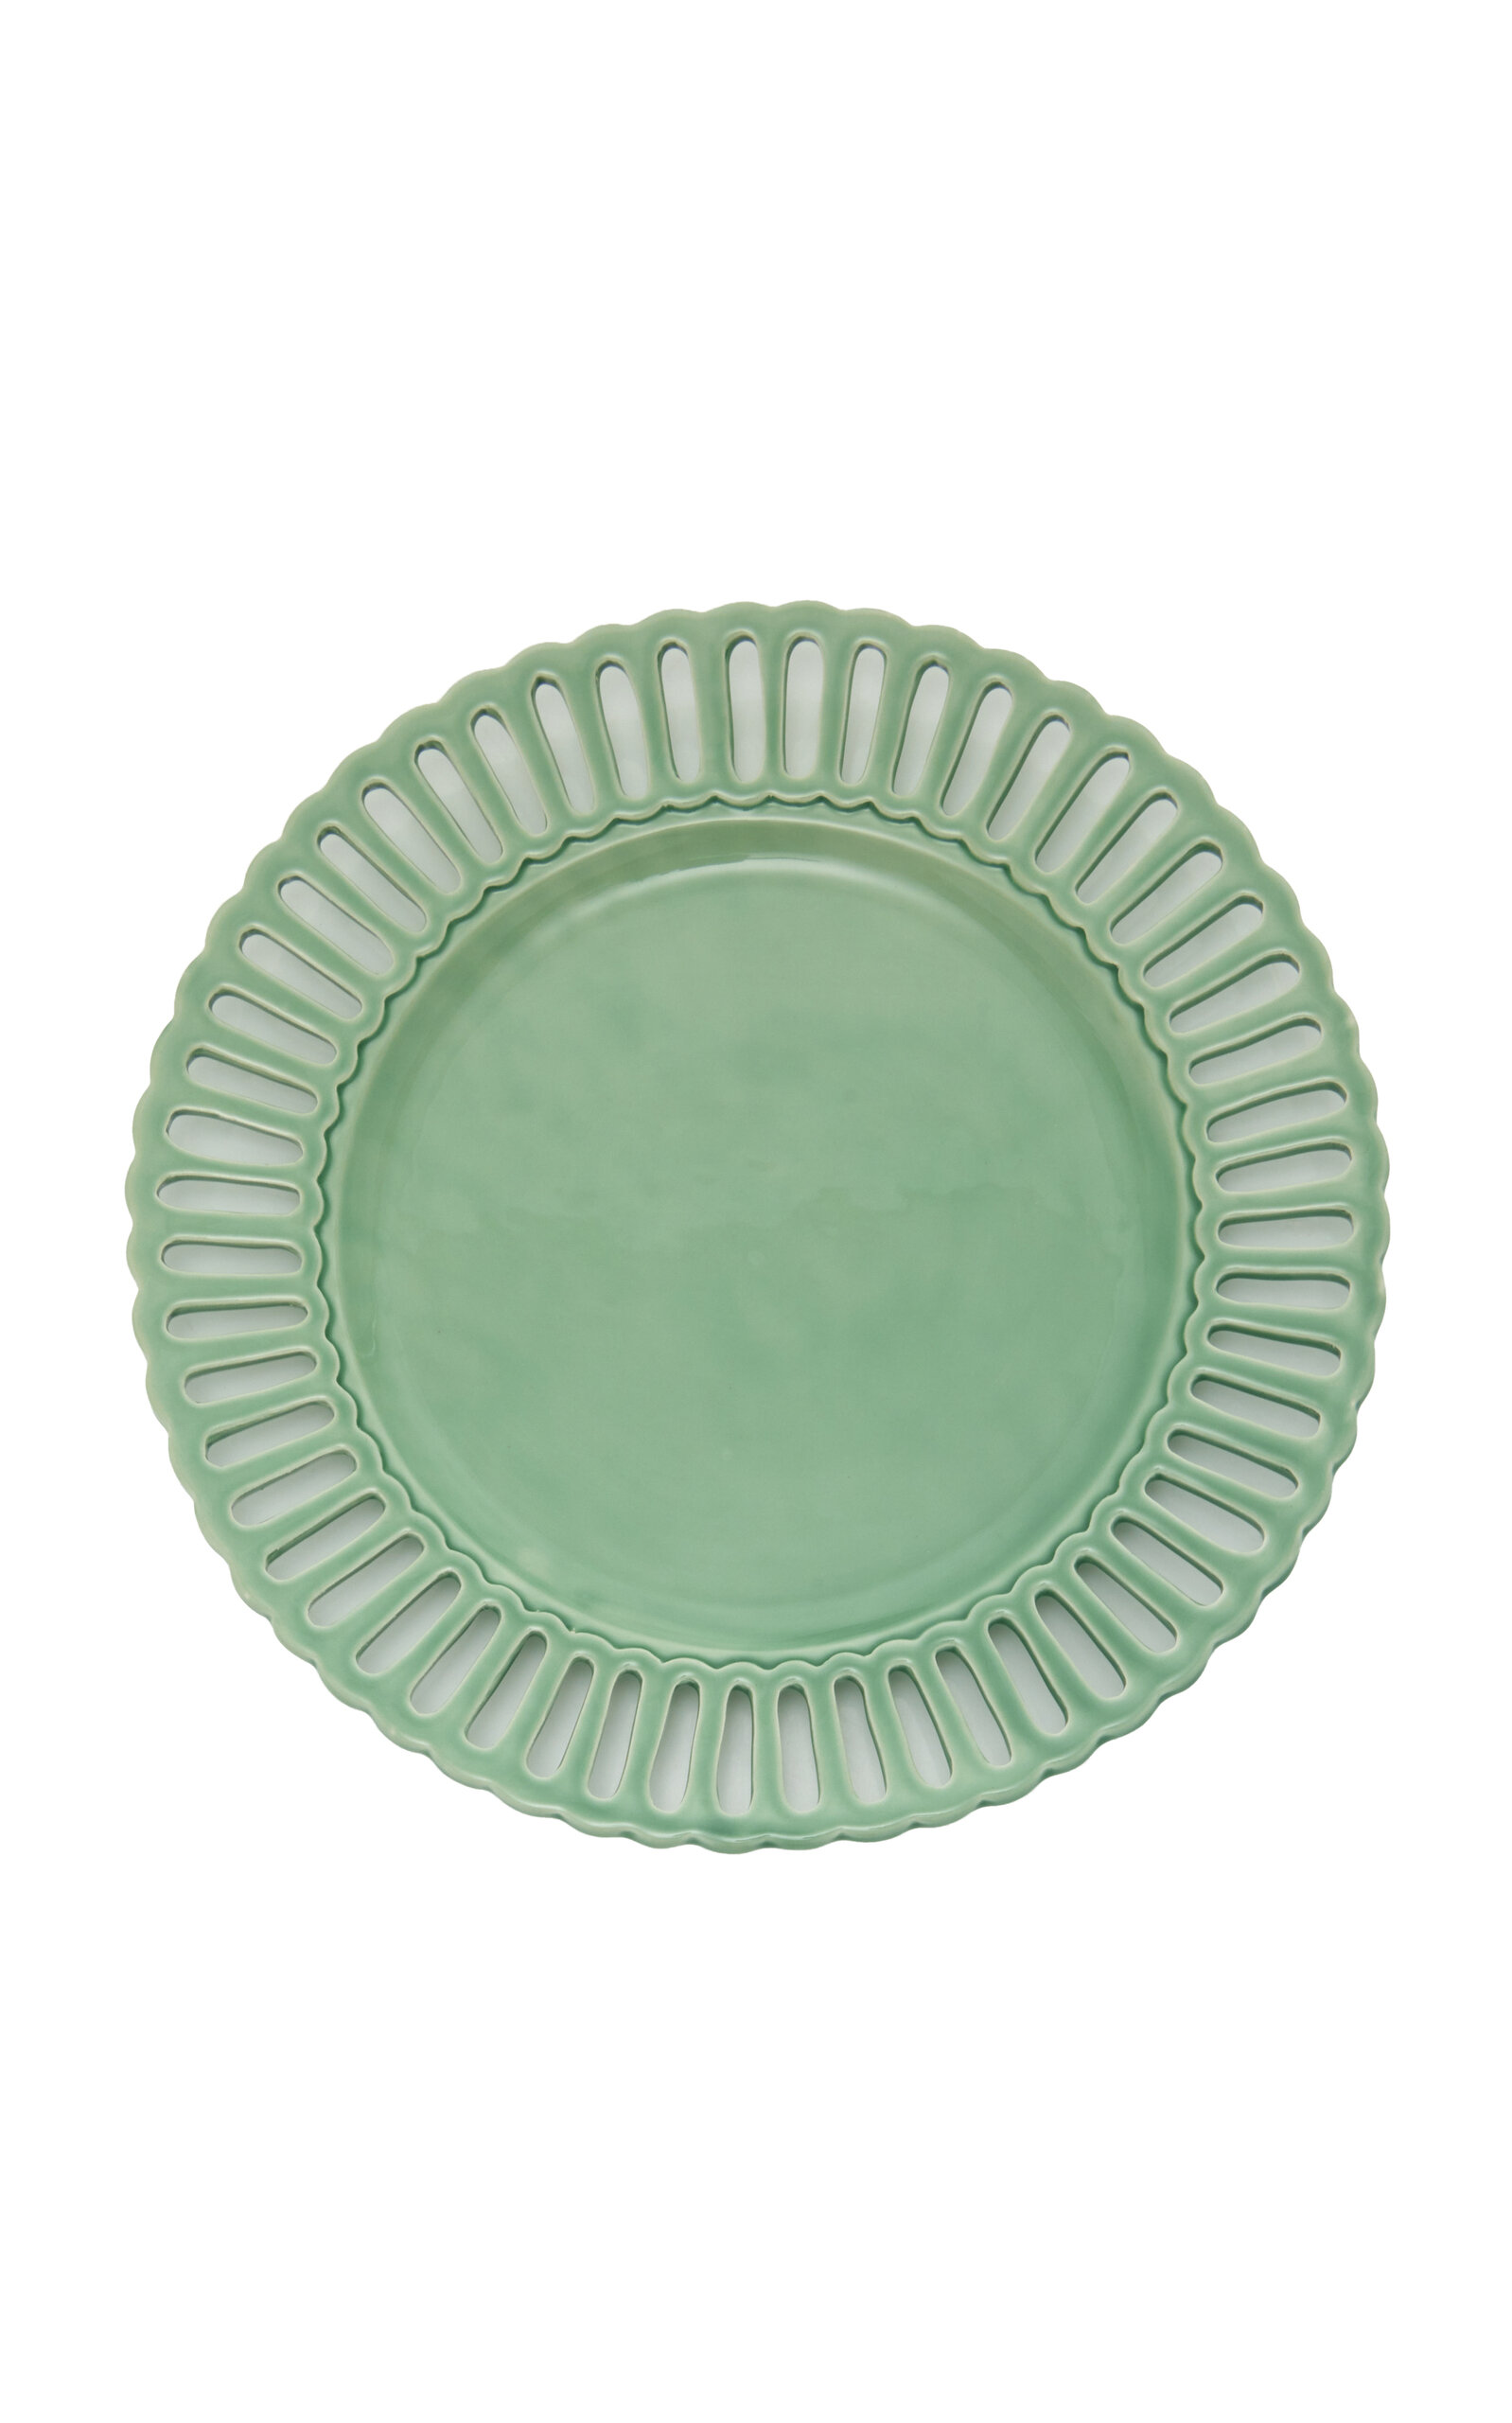 Moda Domus Balconata Creamware Charger Plate In Green